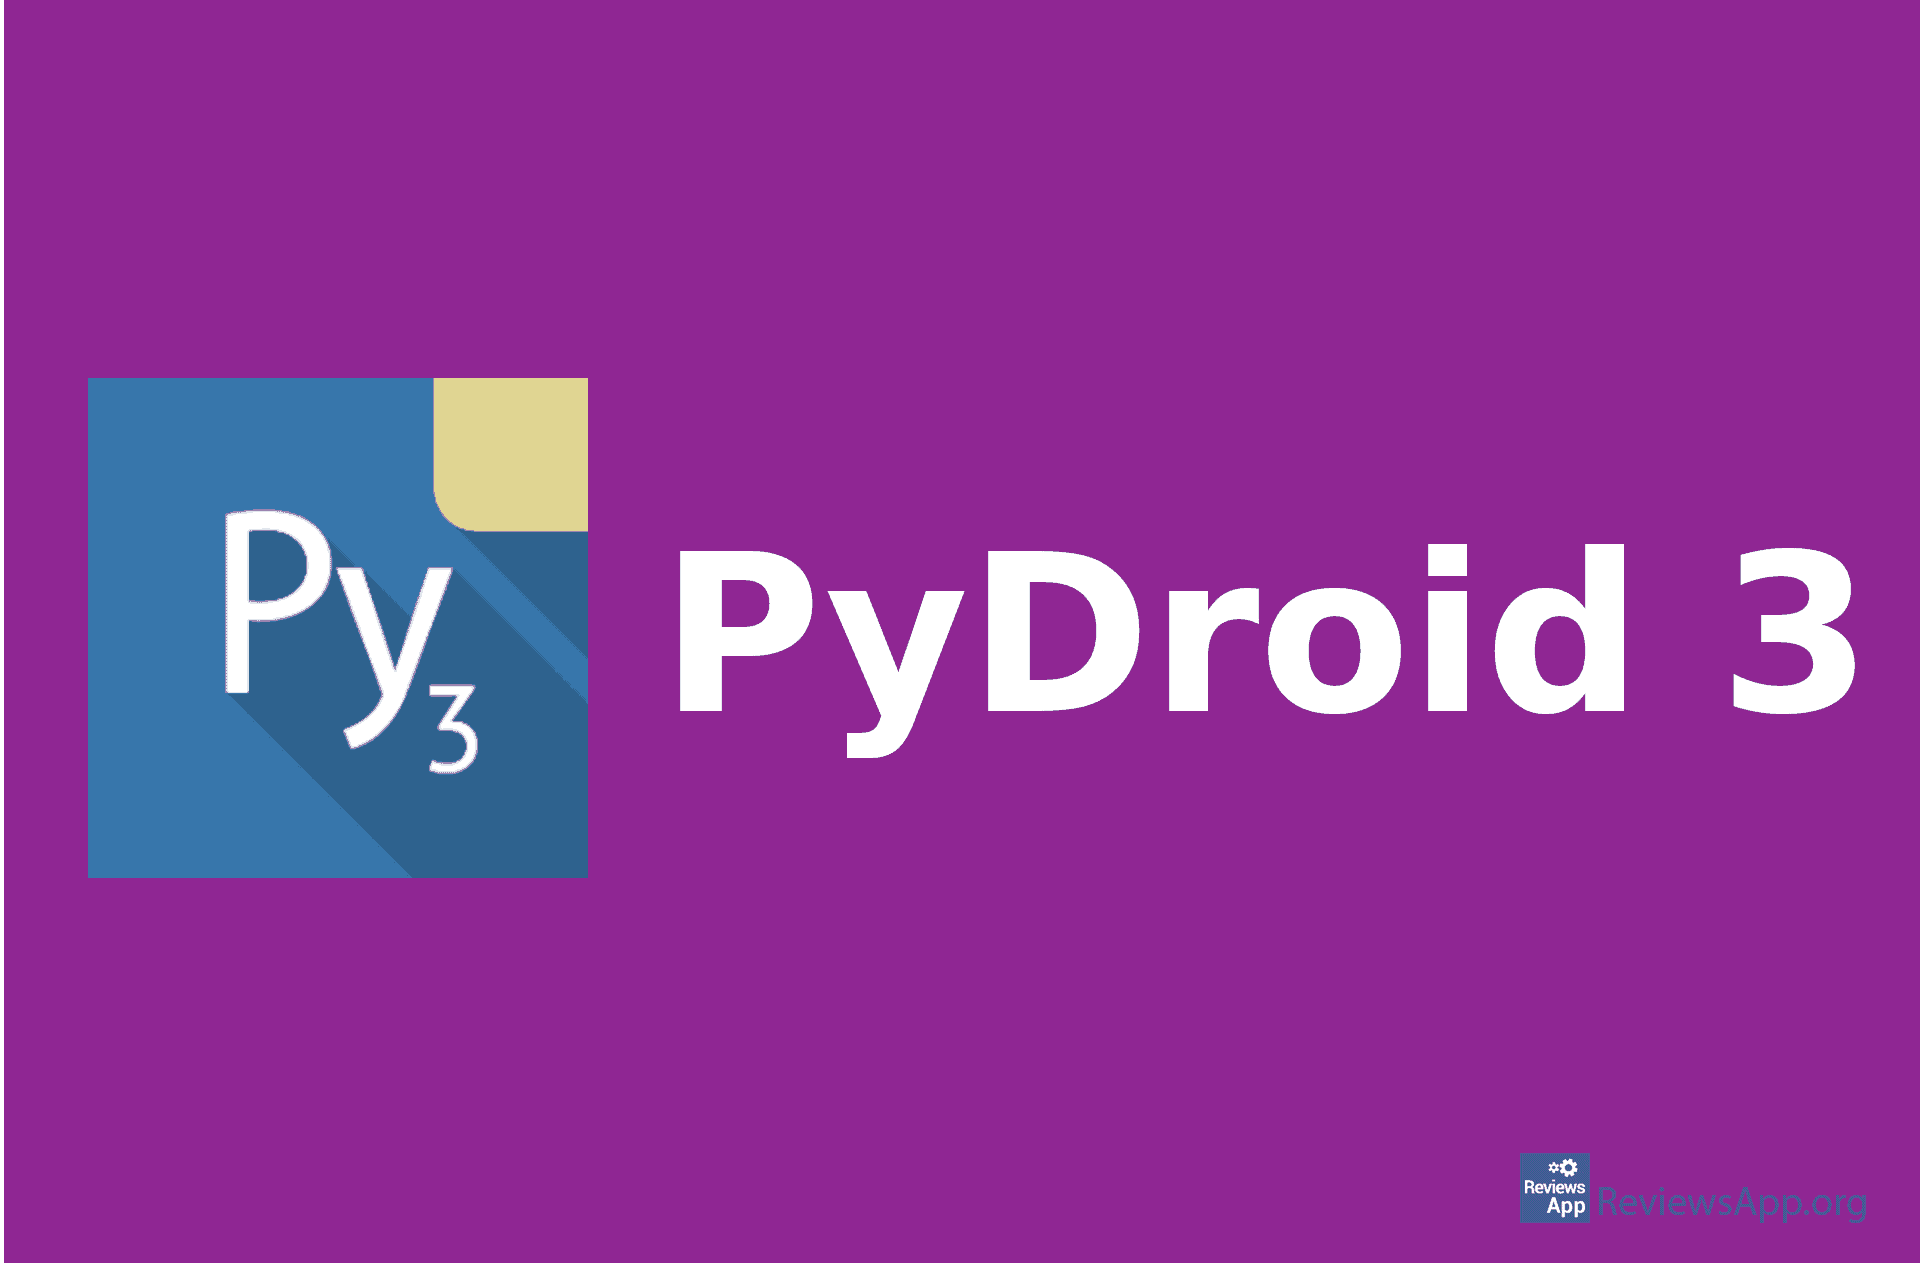 PyDroid 3